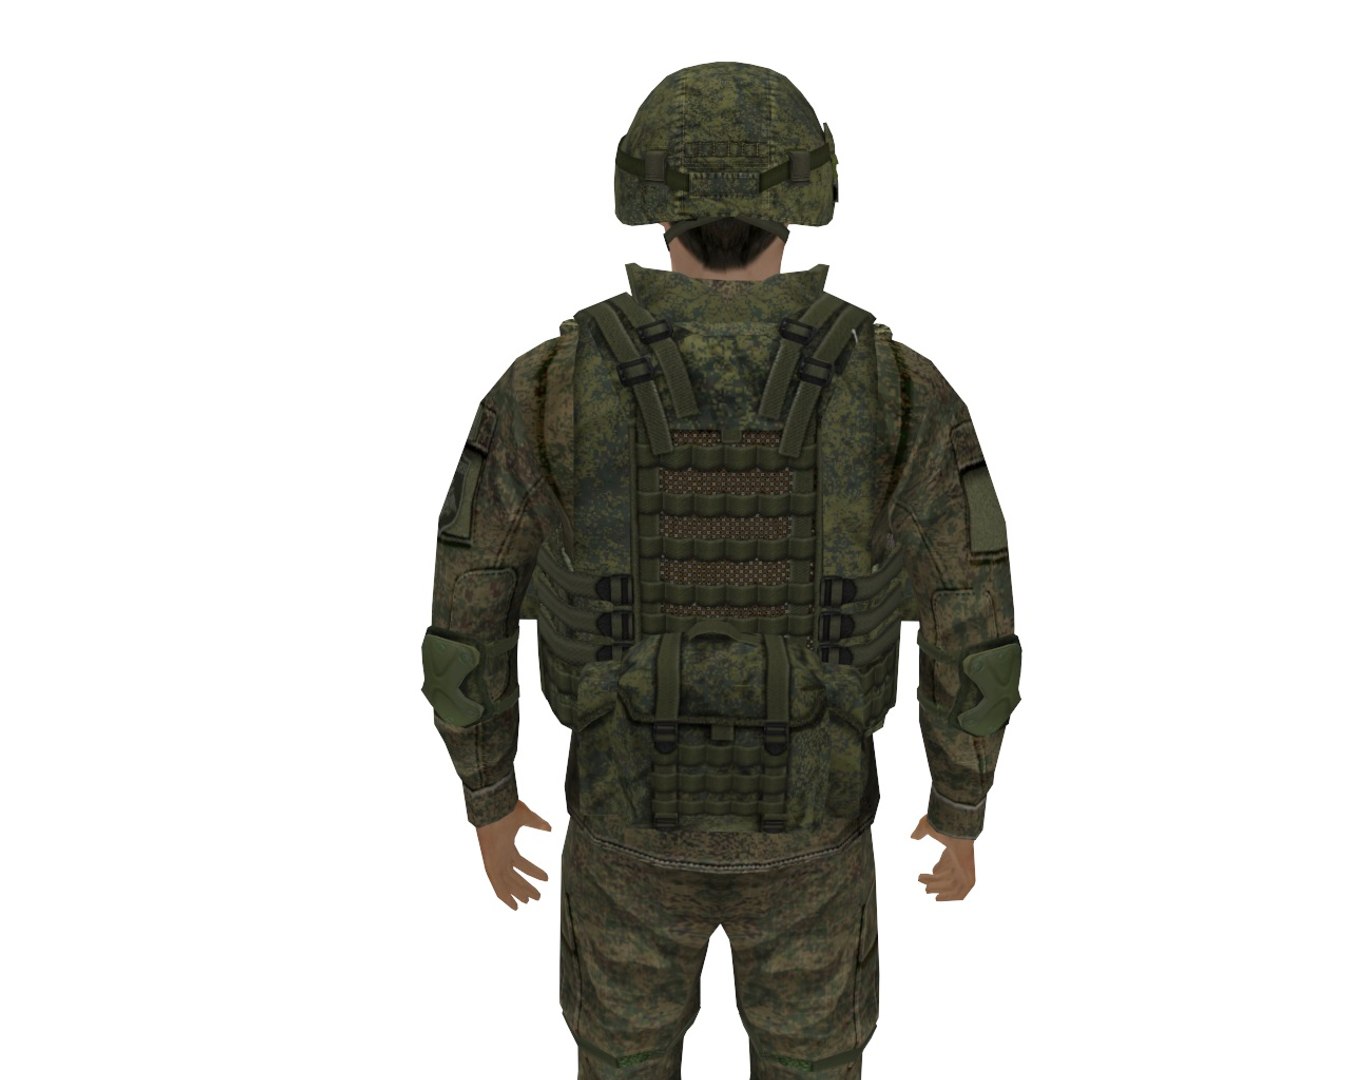 Body armor Rig Military Bulletproof vest Equipment 3D model